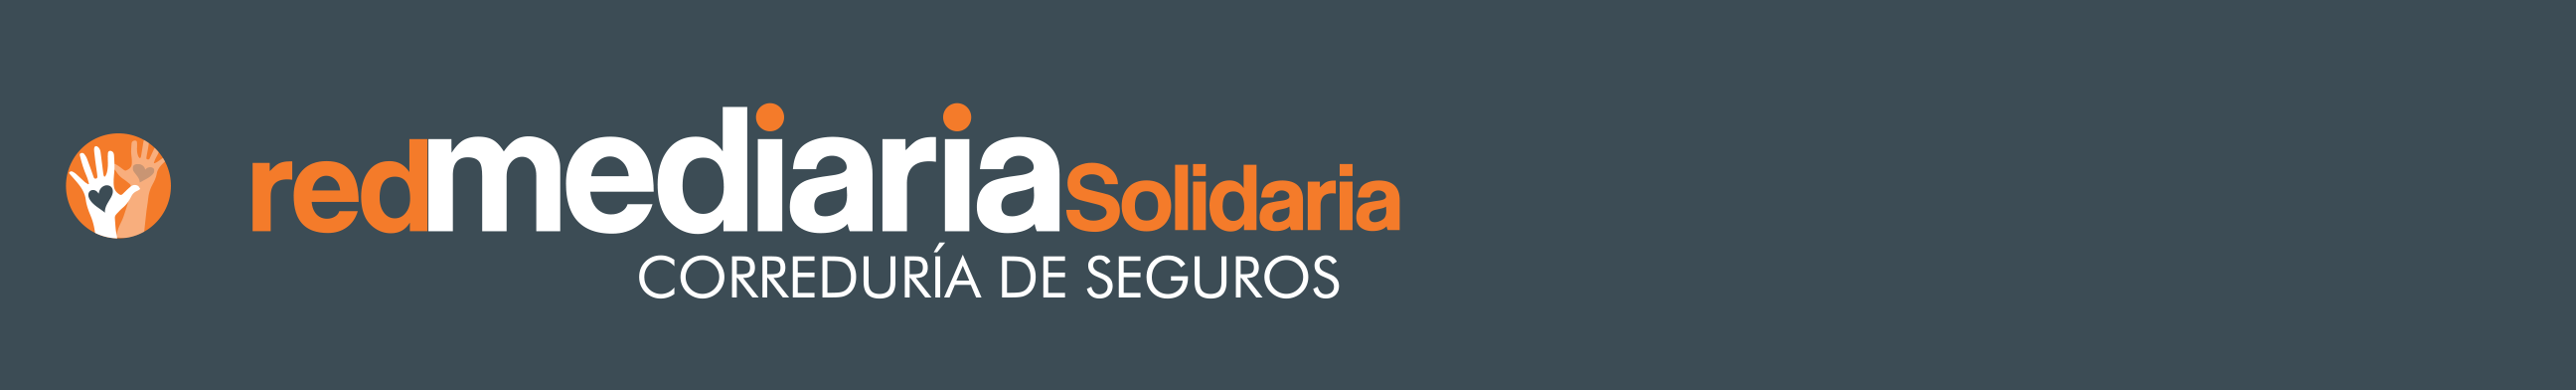 /logo-solidaria.png